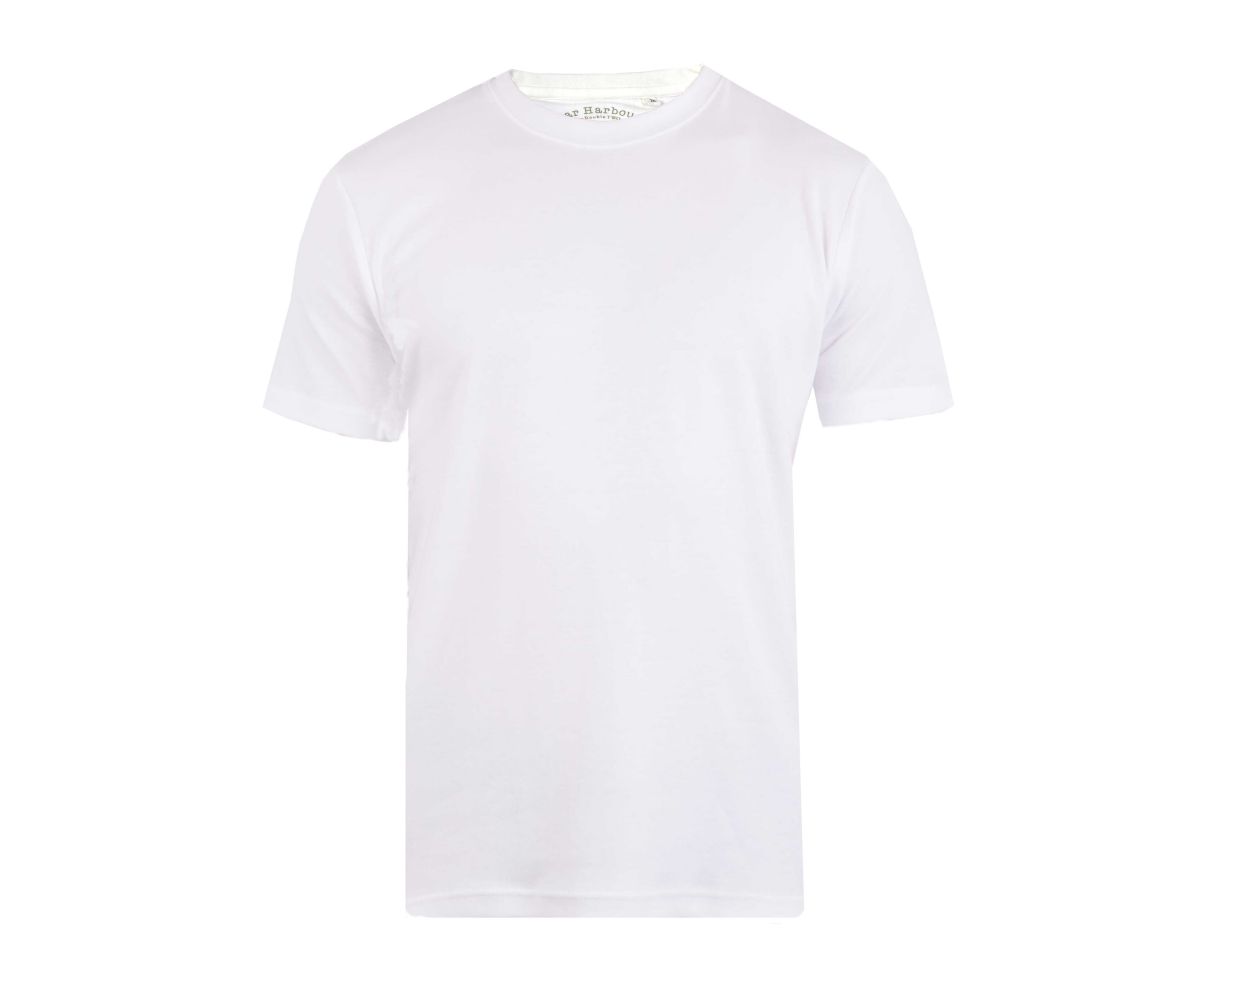 classic white tee shirt